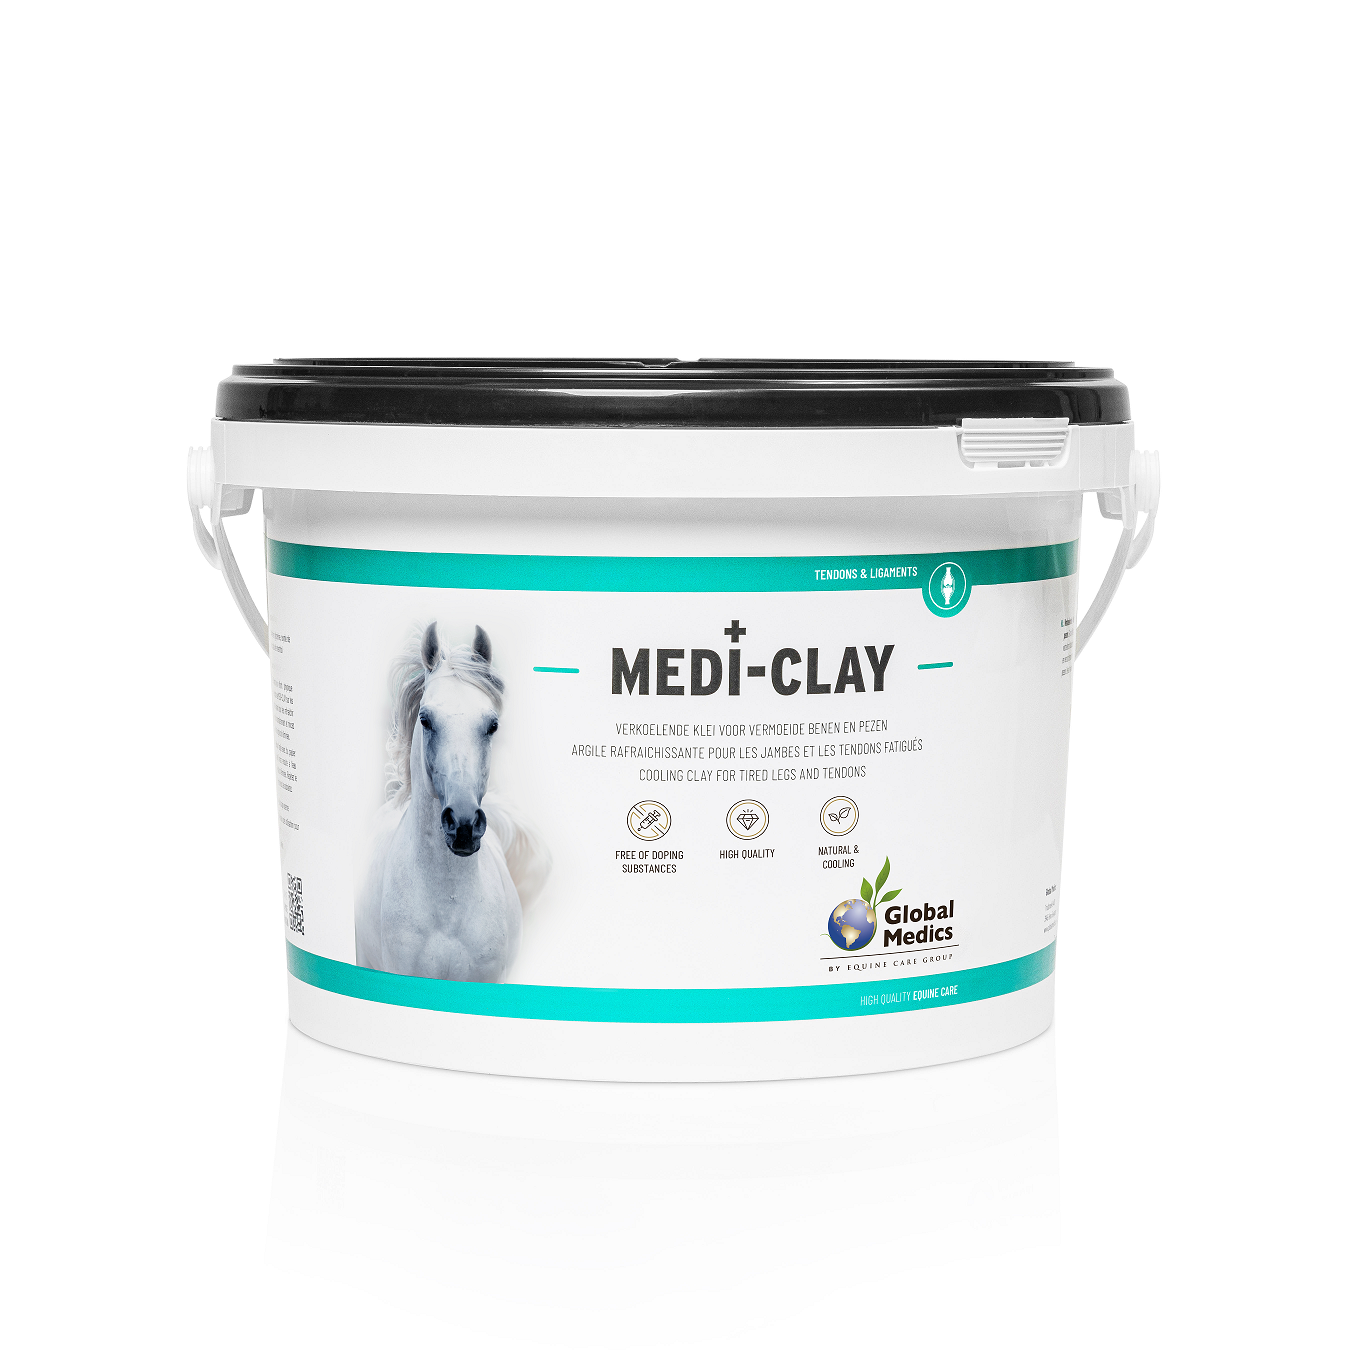 Global Medics - Medi-Clay - LEAD Sports AB